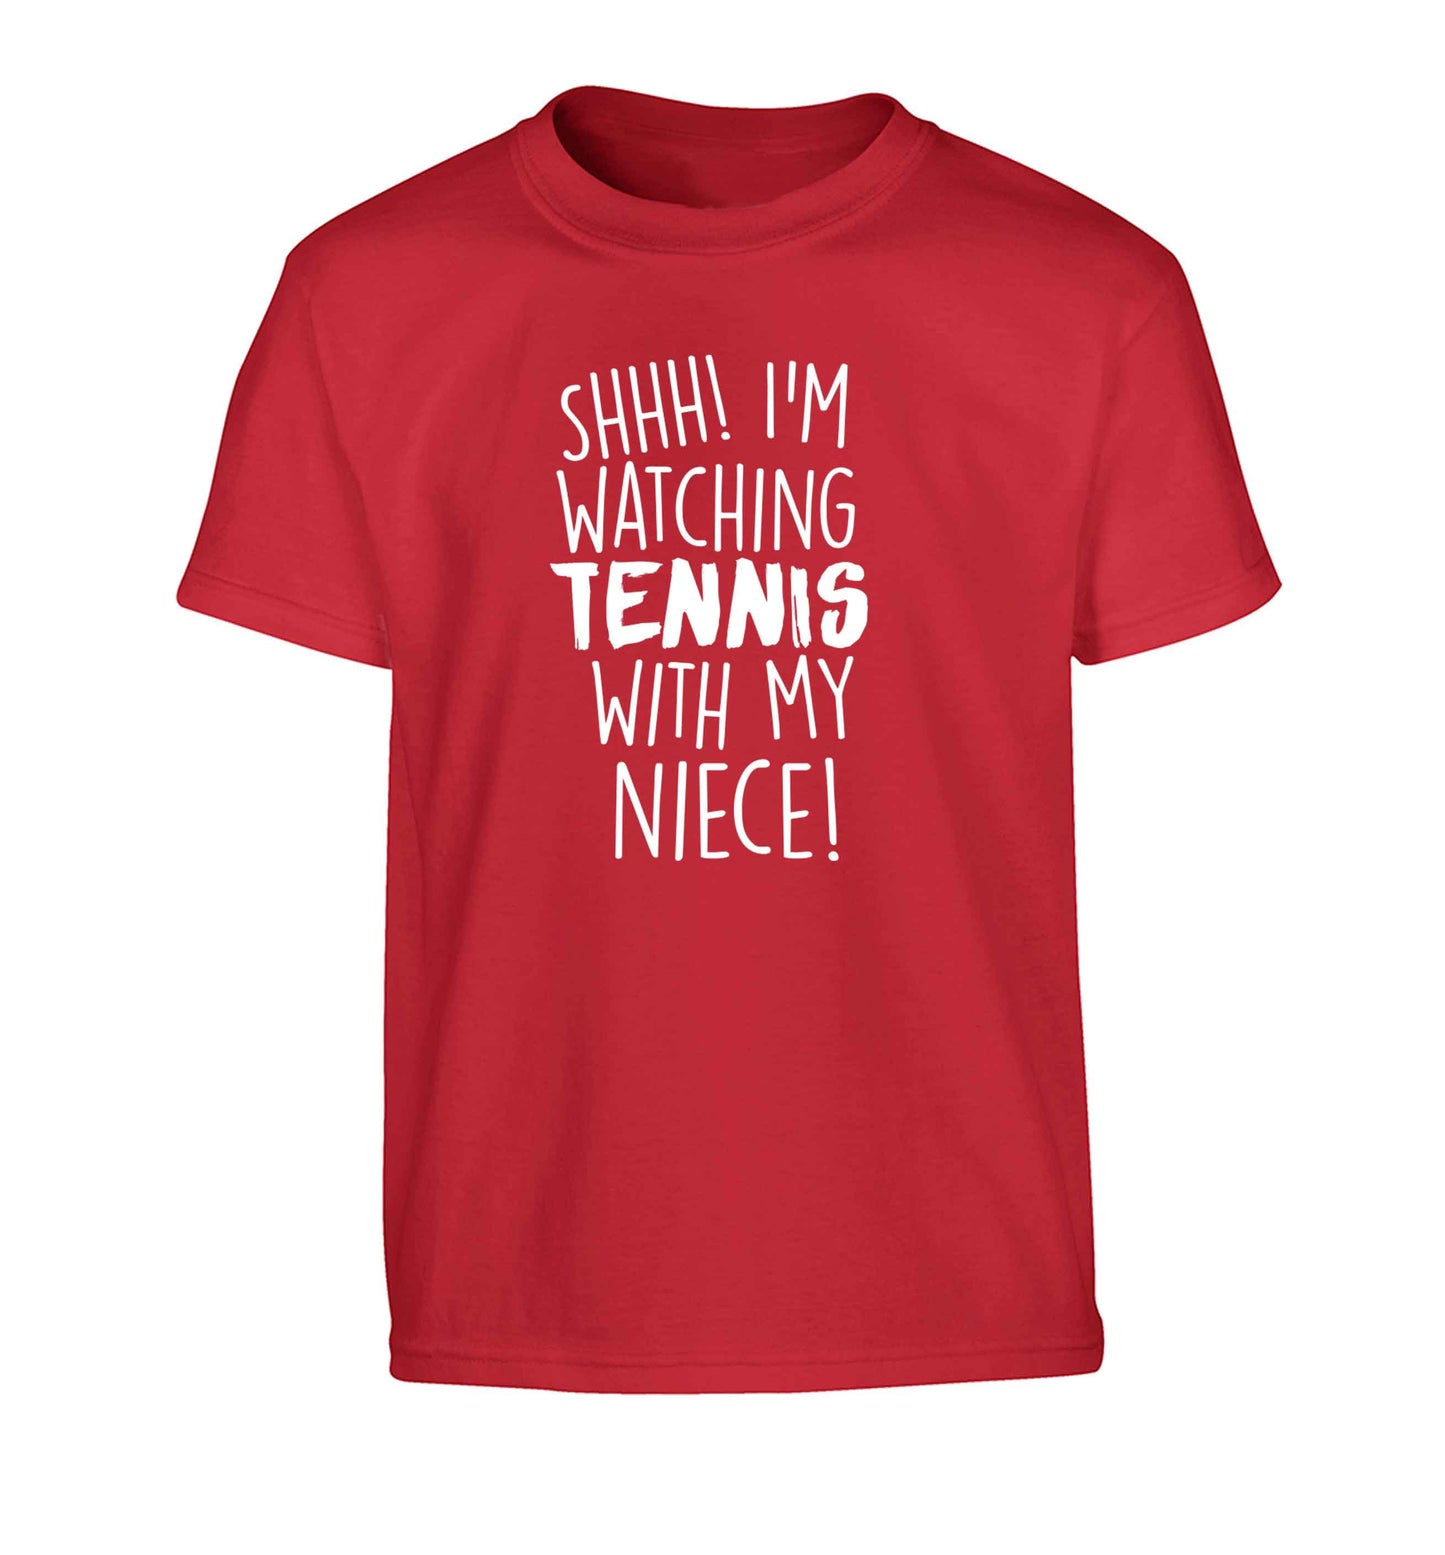 Shh! I'm watching tennis with my niece! Children's red Tshirt 12-13 Years